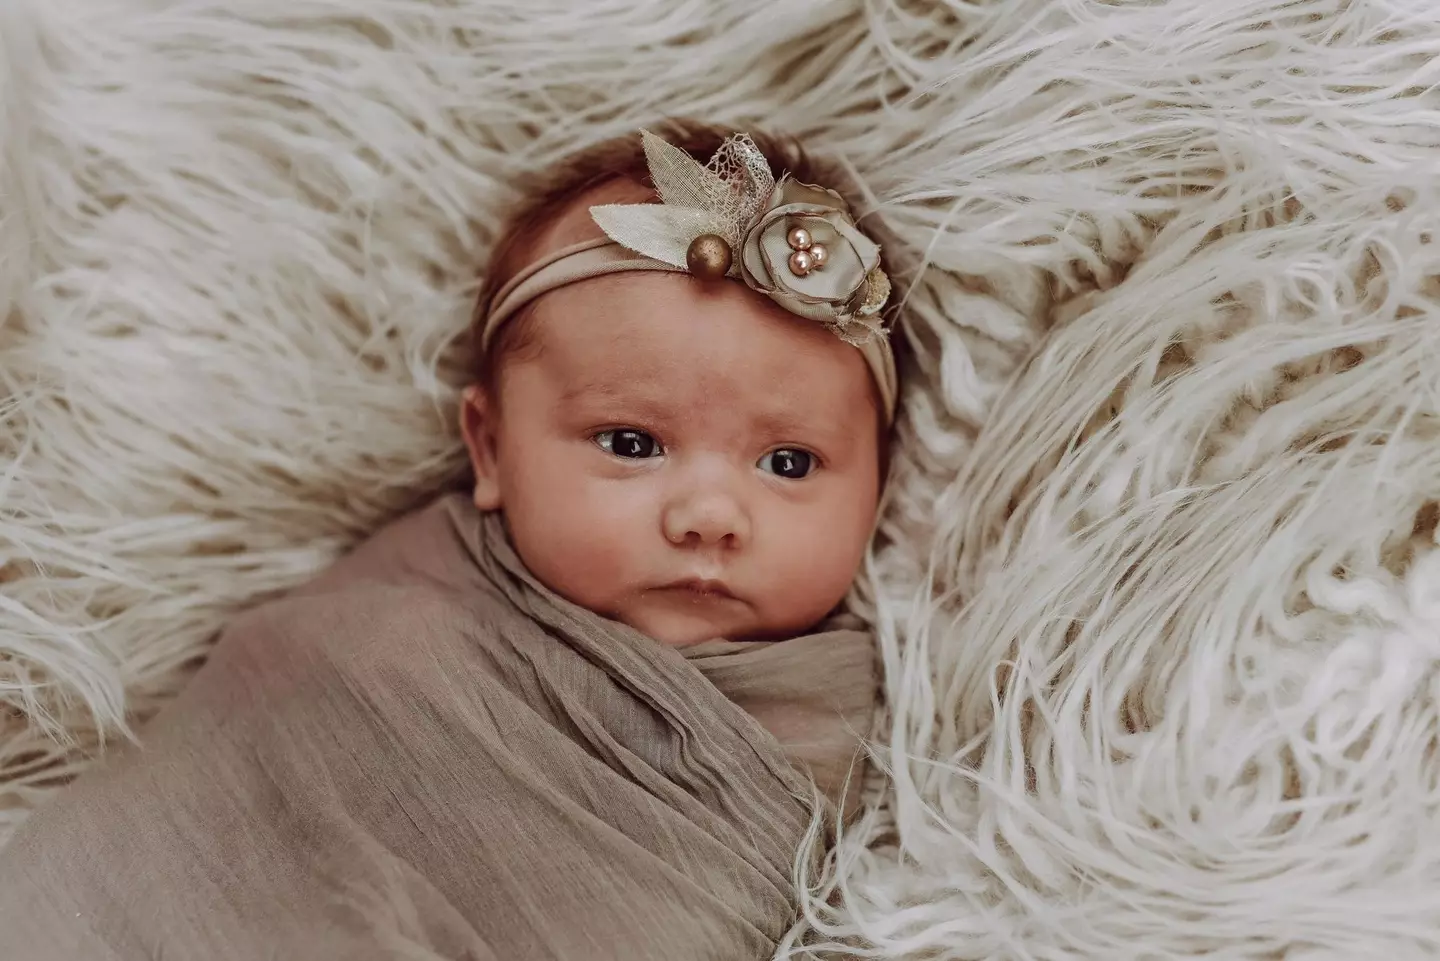 Baby Ophelia was born three weeks after Jonathon's death.